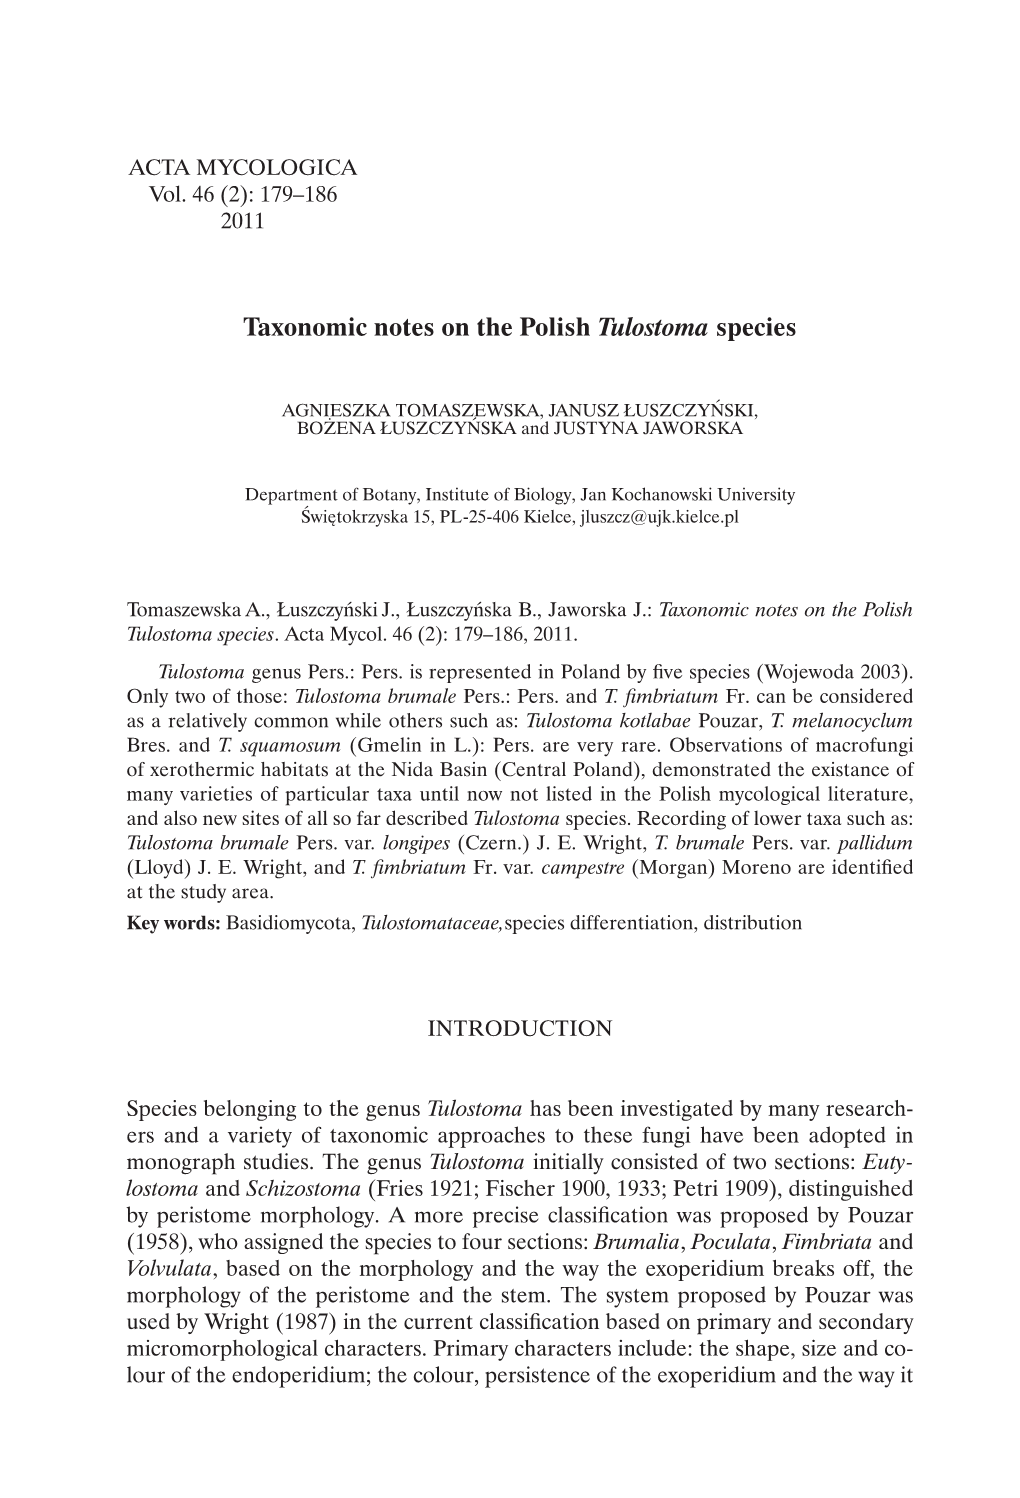 Taxonomic Notes on the Polish Tulostoma Species